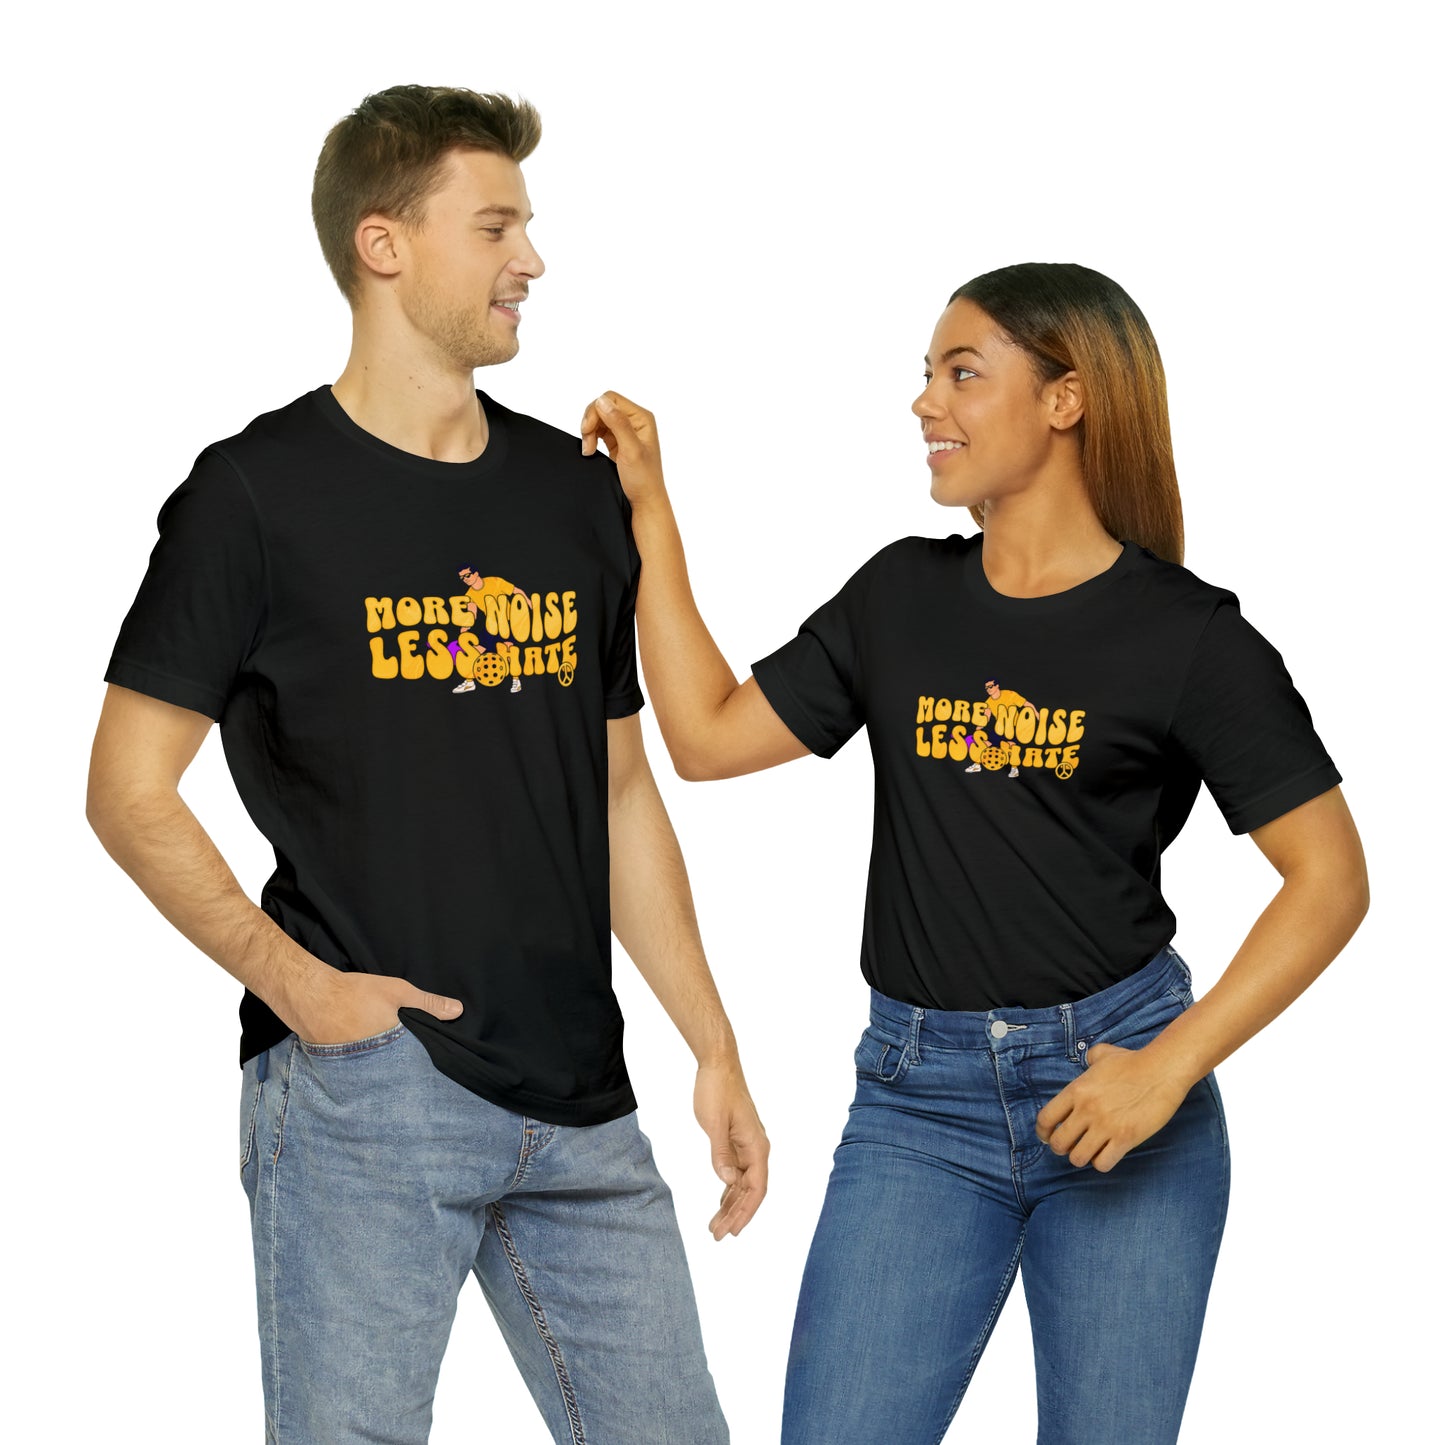 Pickleball T-Shirt: More Noise, Less Hate